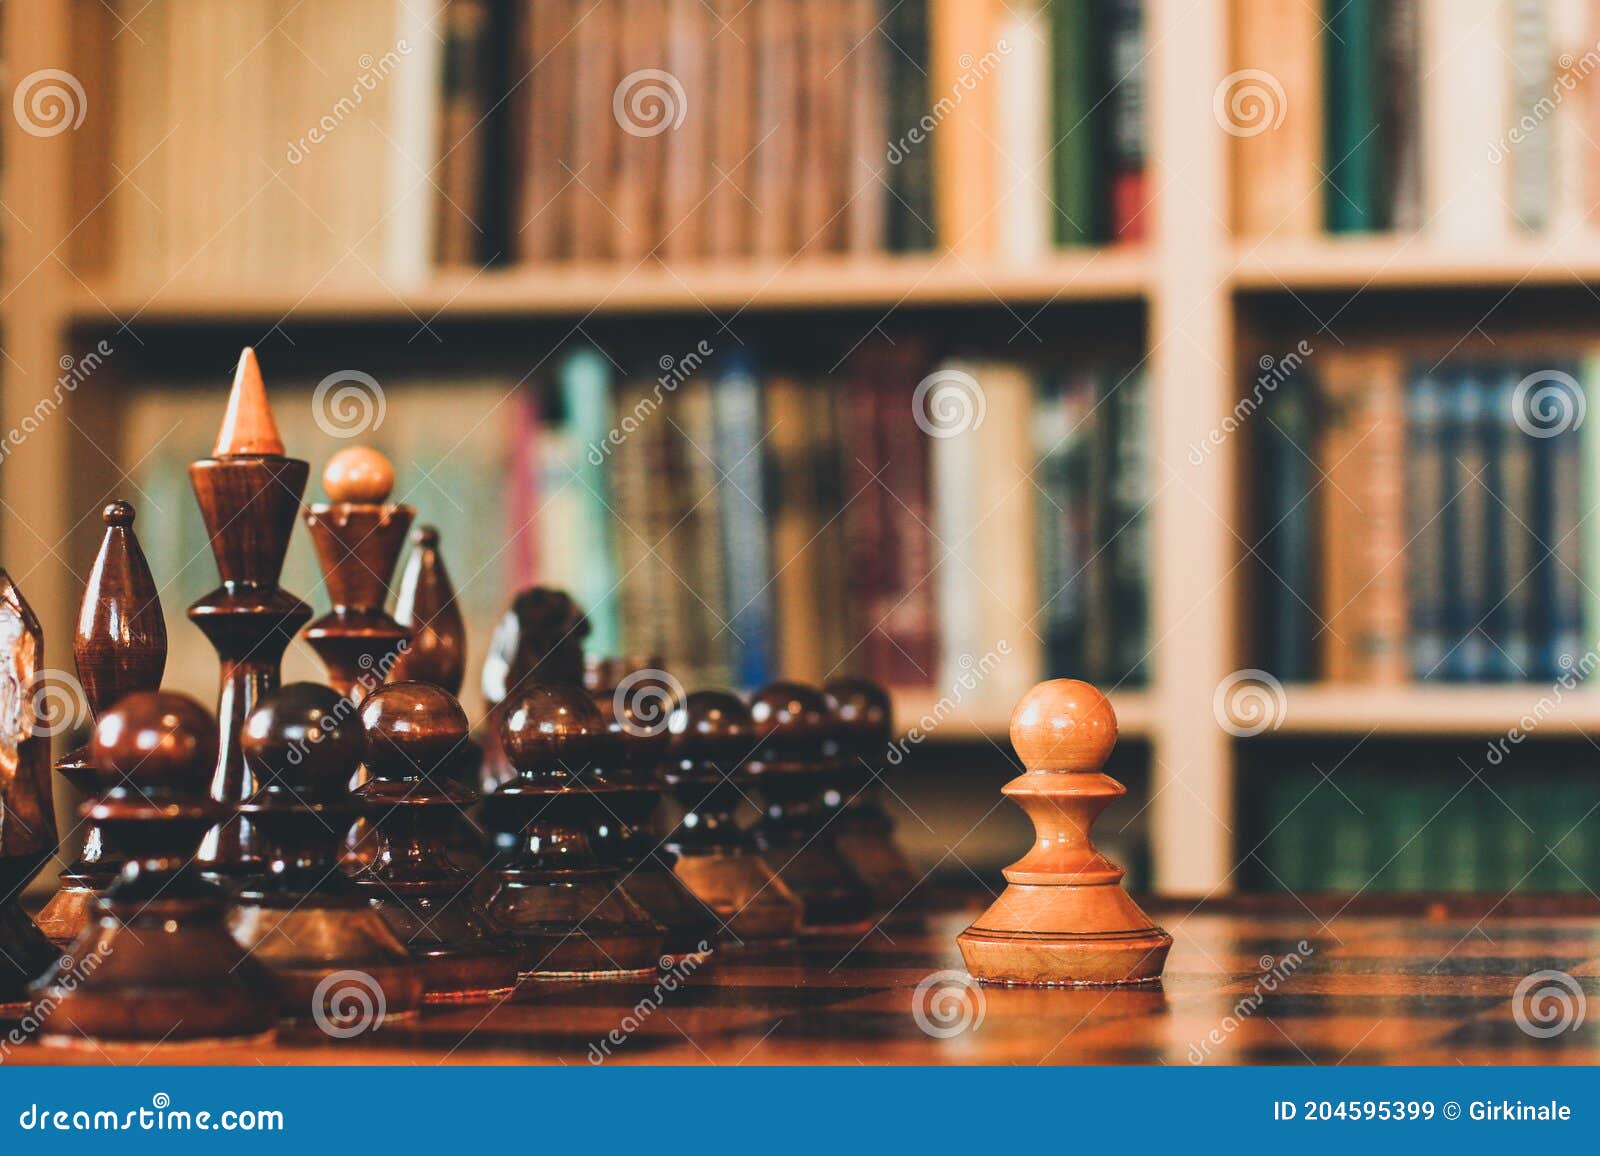 Peão peça xadrez madeira